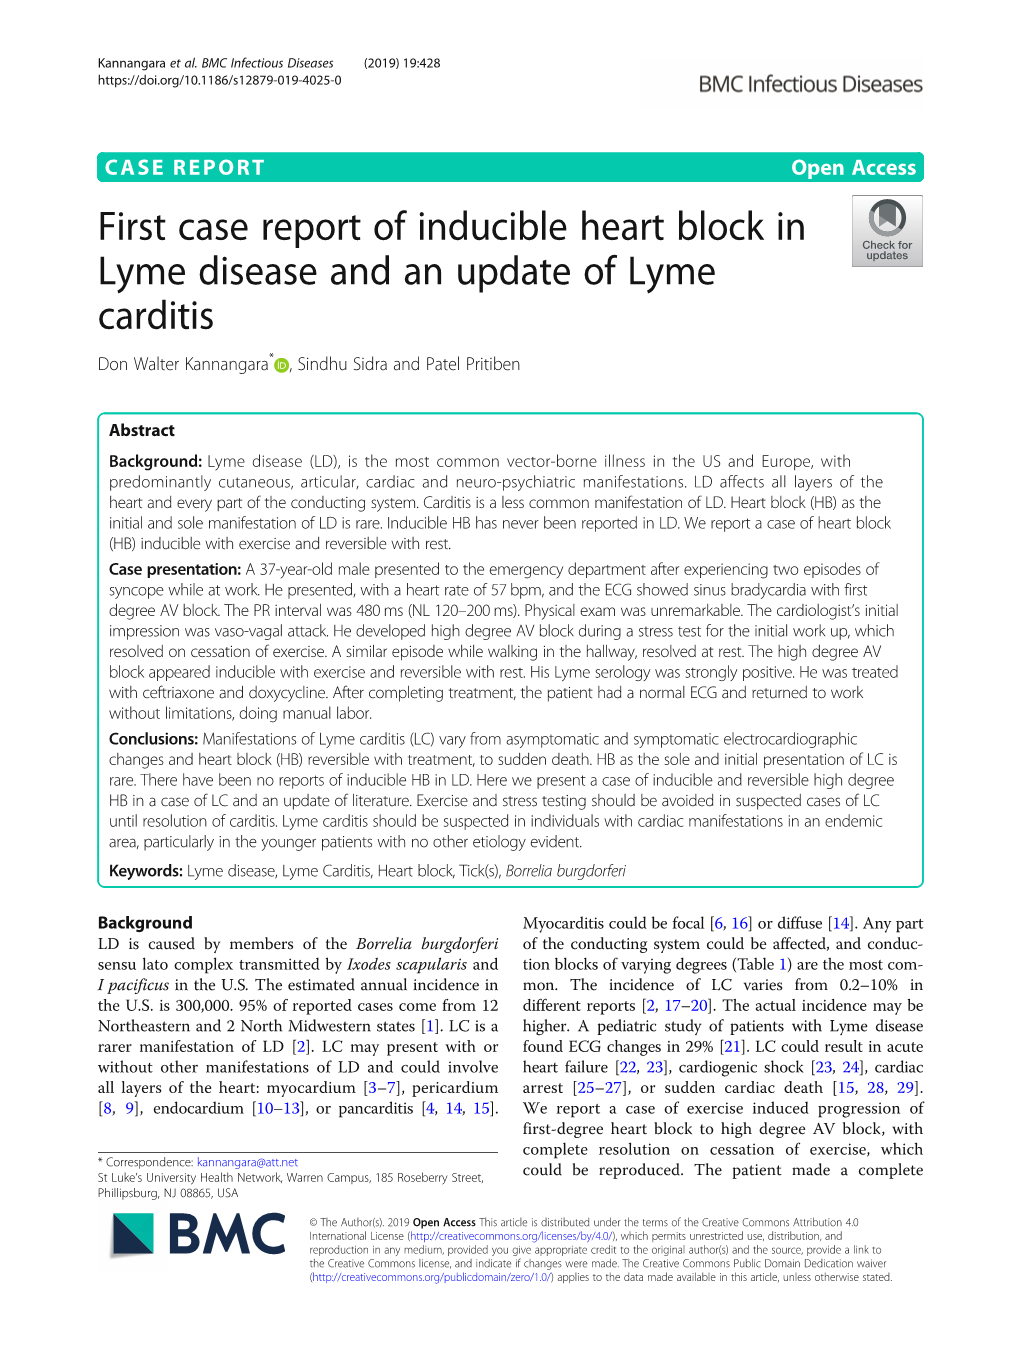 First Case Report of Inducible Heart Block in Lyme Disease and an Update of Lyme Carditis Don Walter Kannangara* , Sindhu Sidra and Patel Pritiben